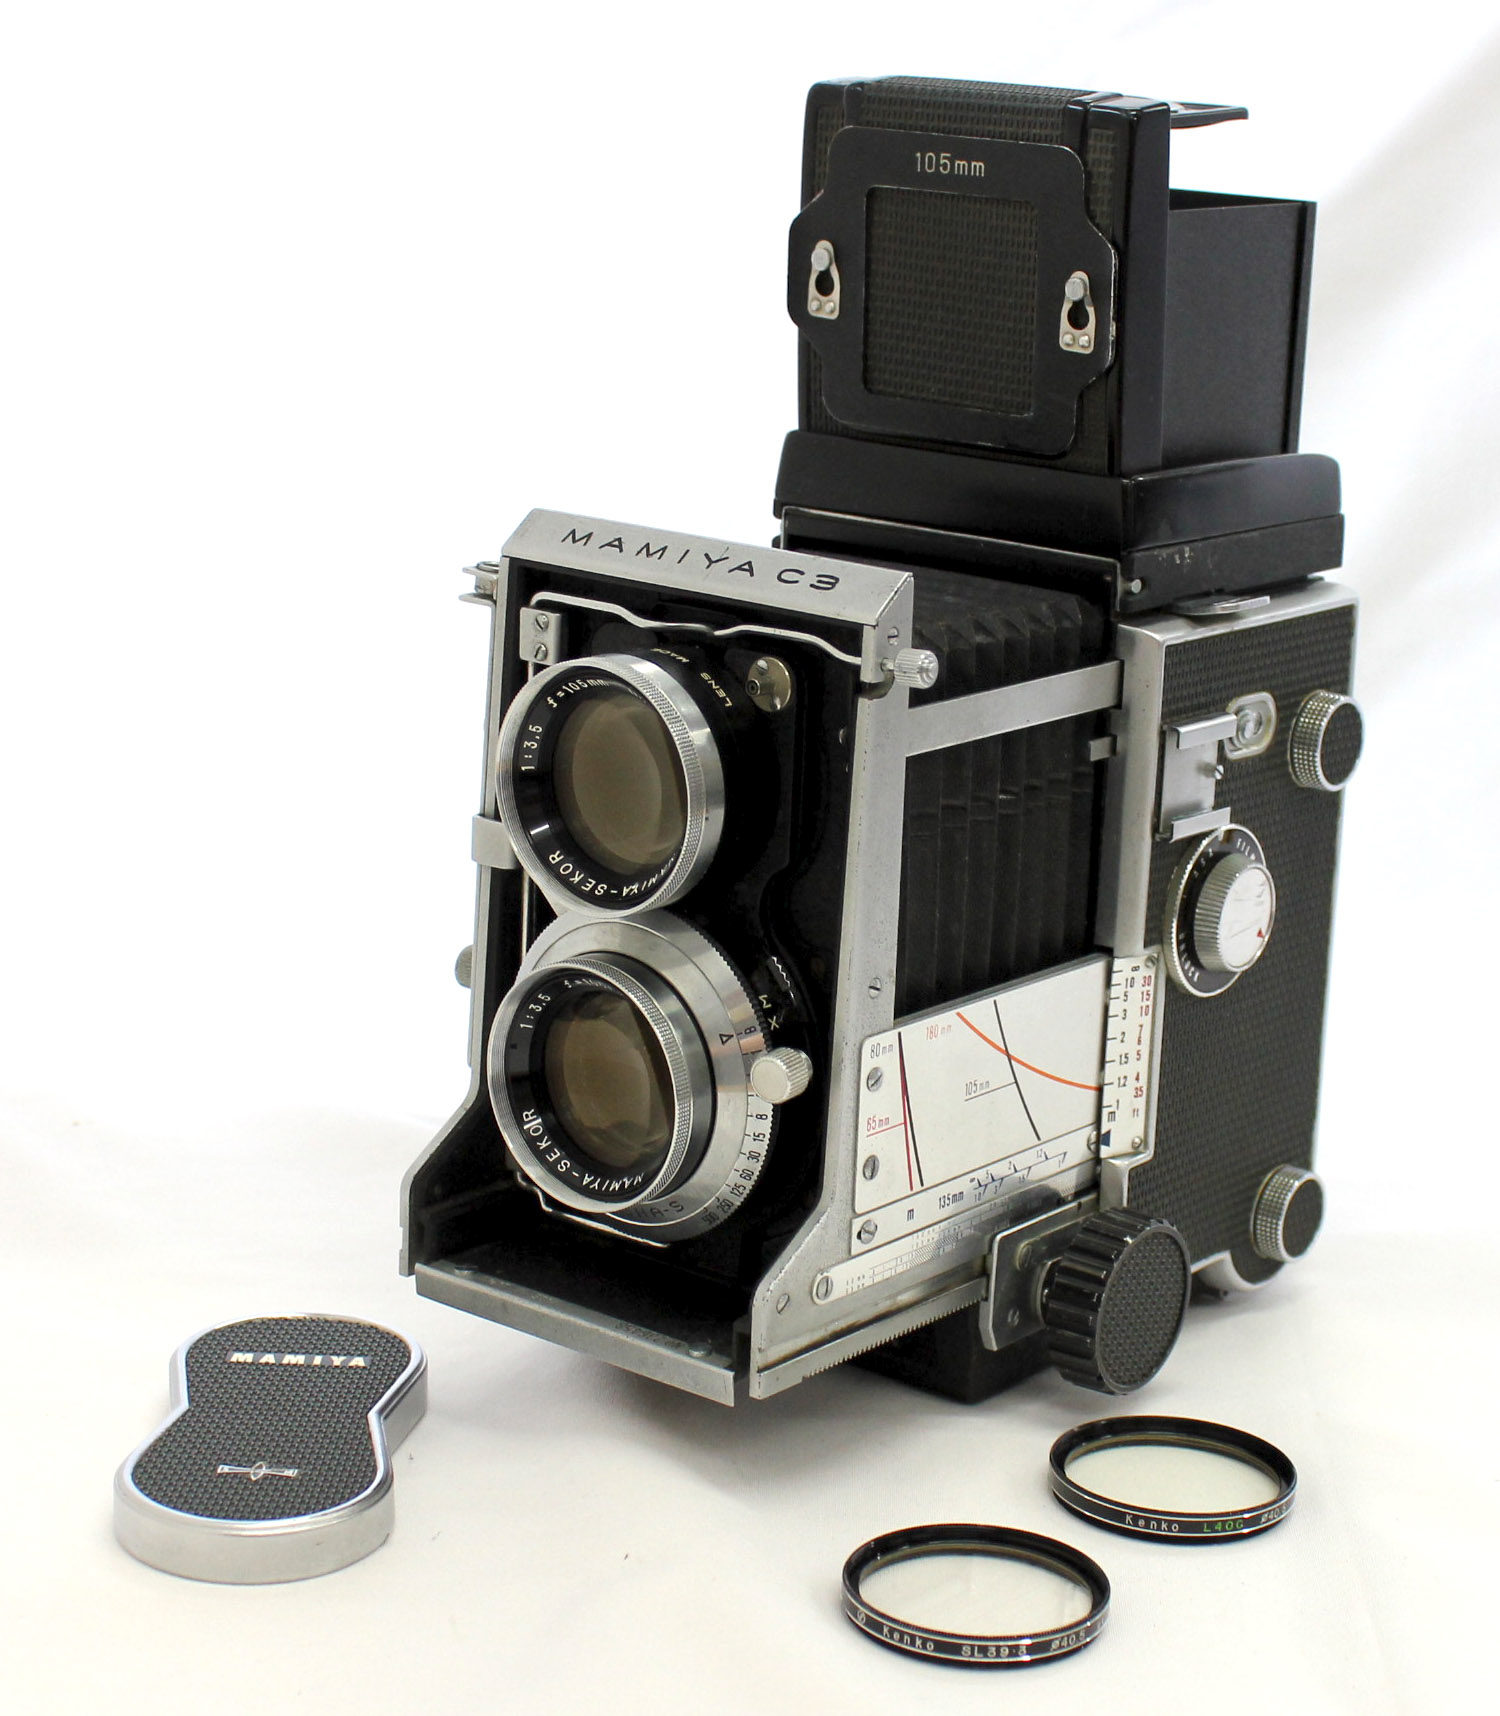  Mamiya C3 Professional Medium Format TLR Camera with 105mm F3.5 Lens from Japan Photo 0